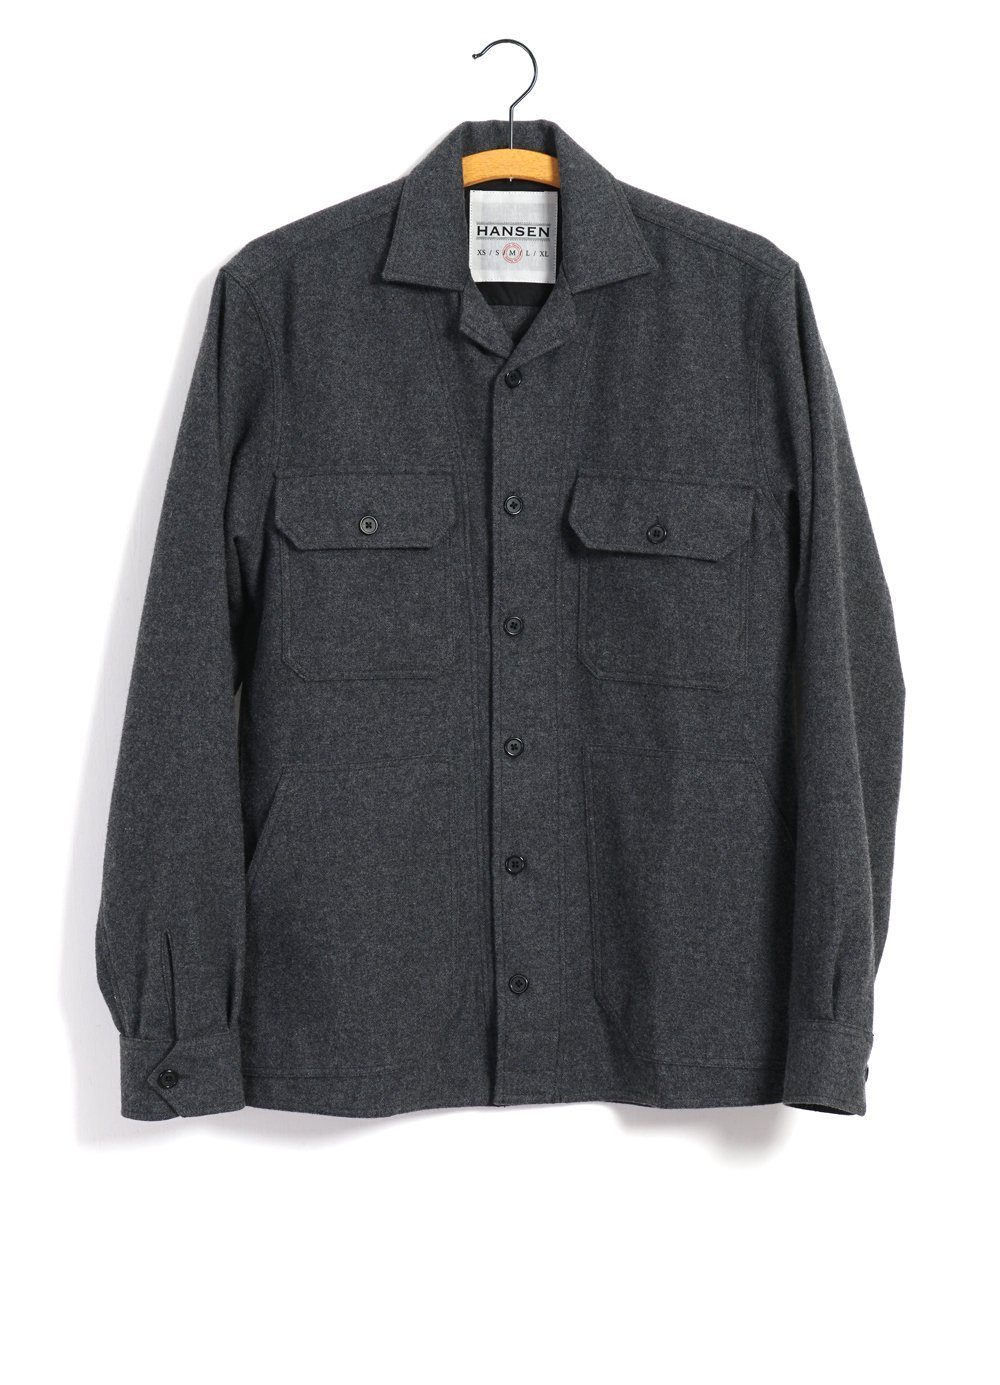 HANSEN Garments - STEFAN | Worker Over Shirt | Grey Melange - HANSEN Garments